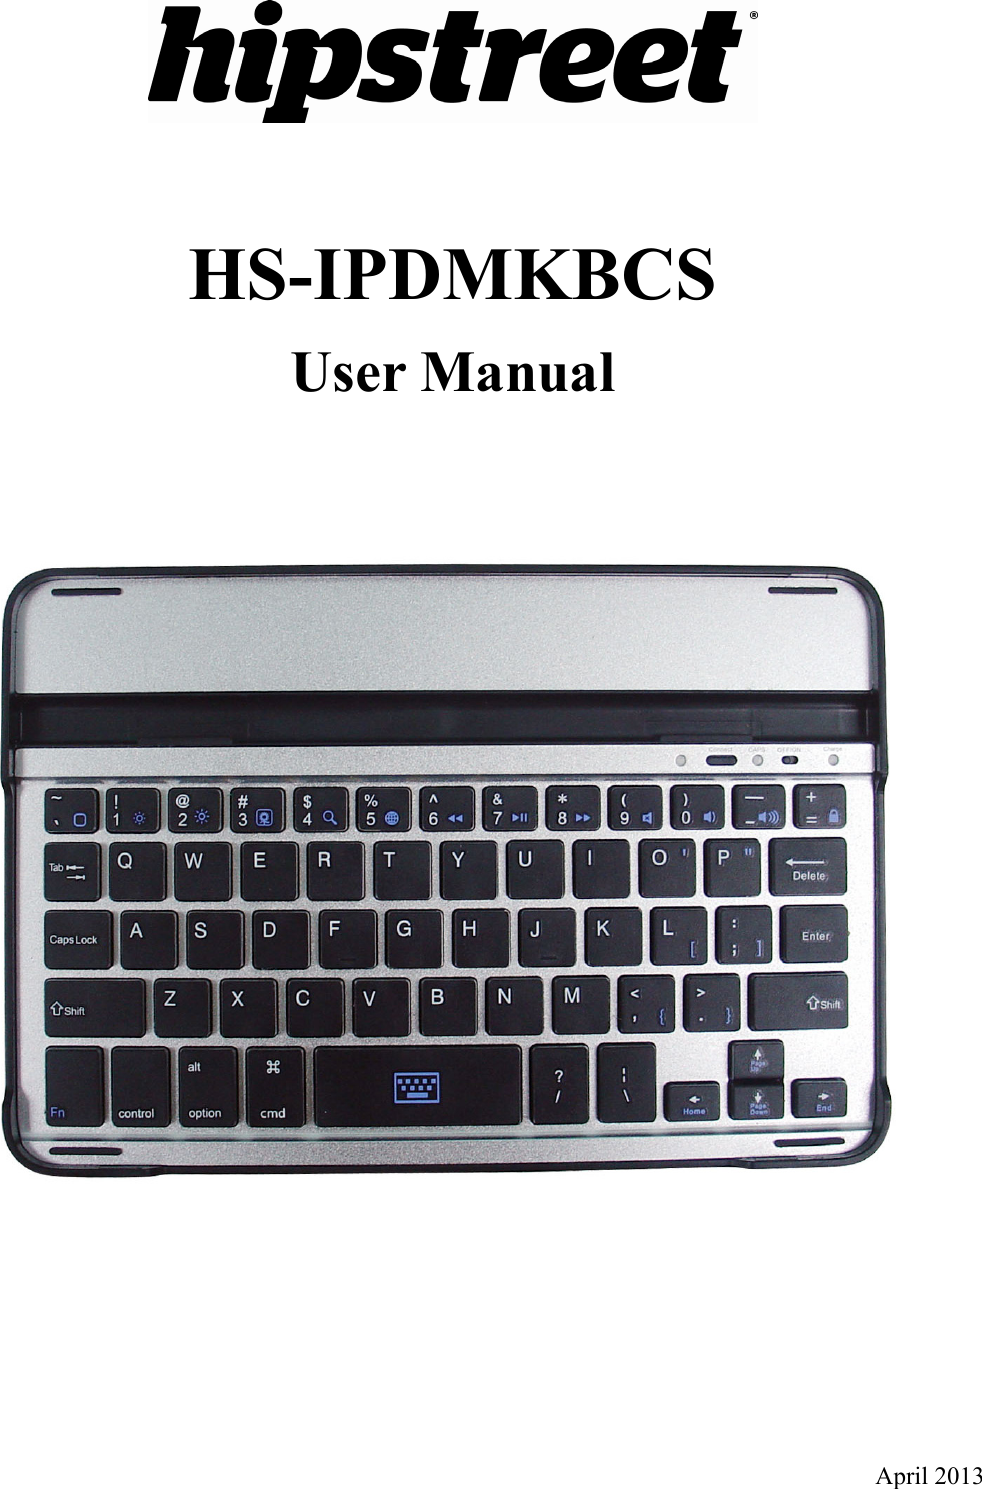    HS-IPDMKBCS User Manual          April 2013  